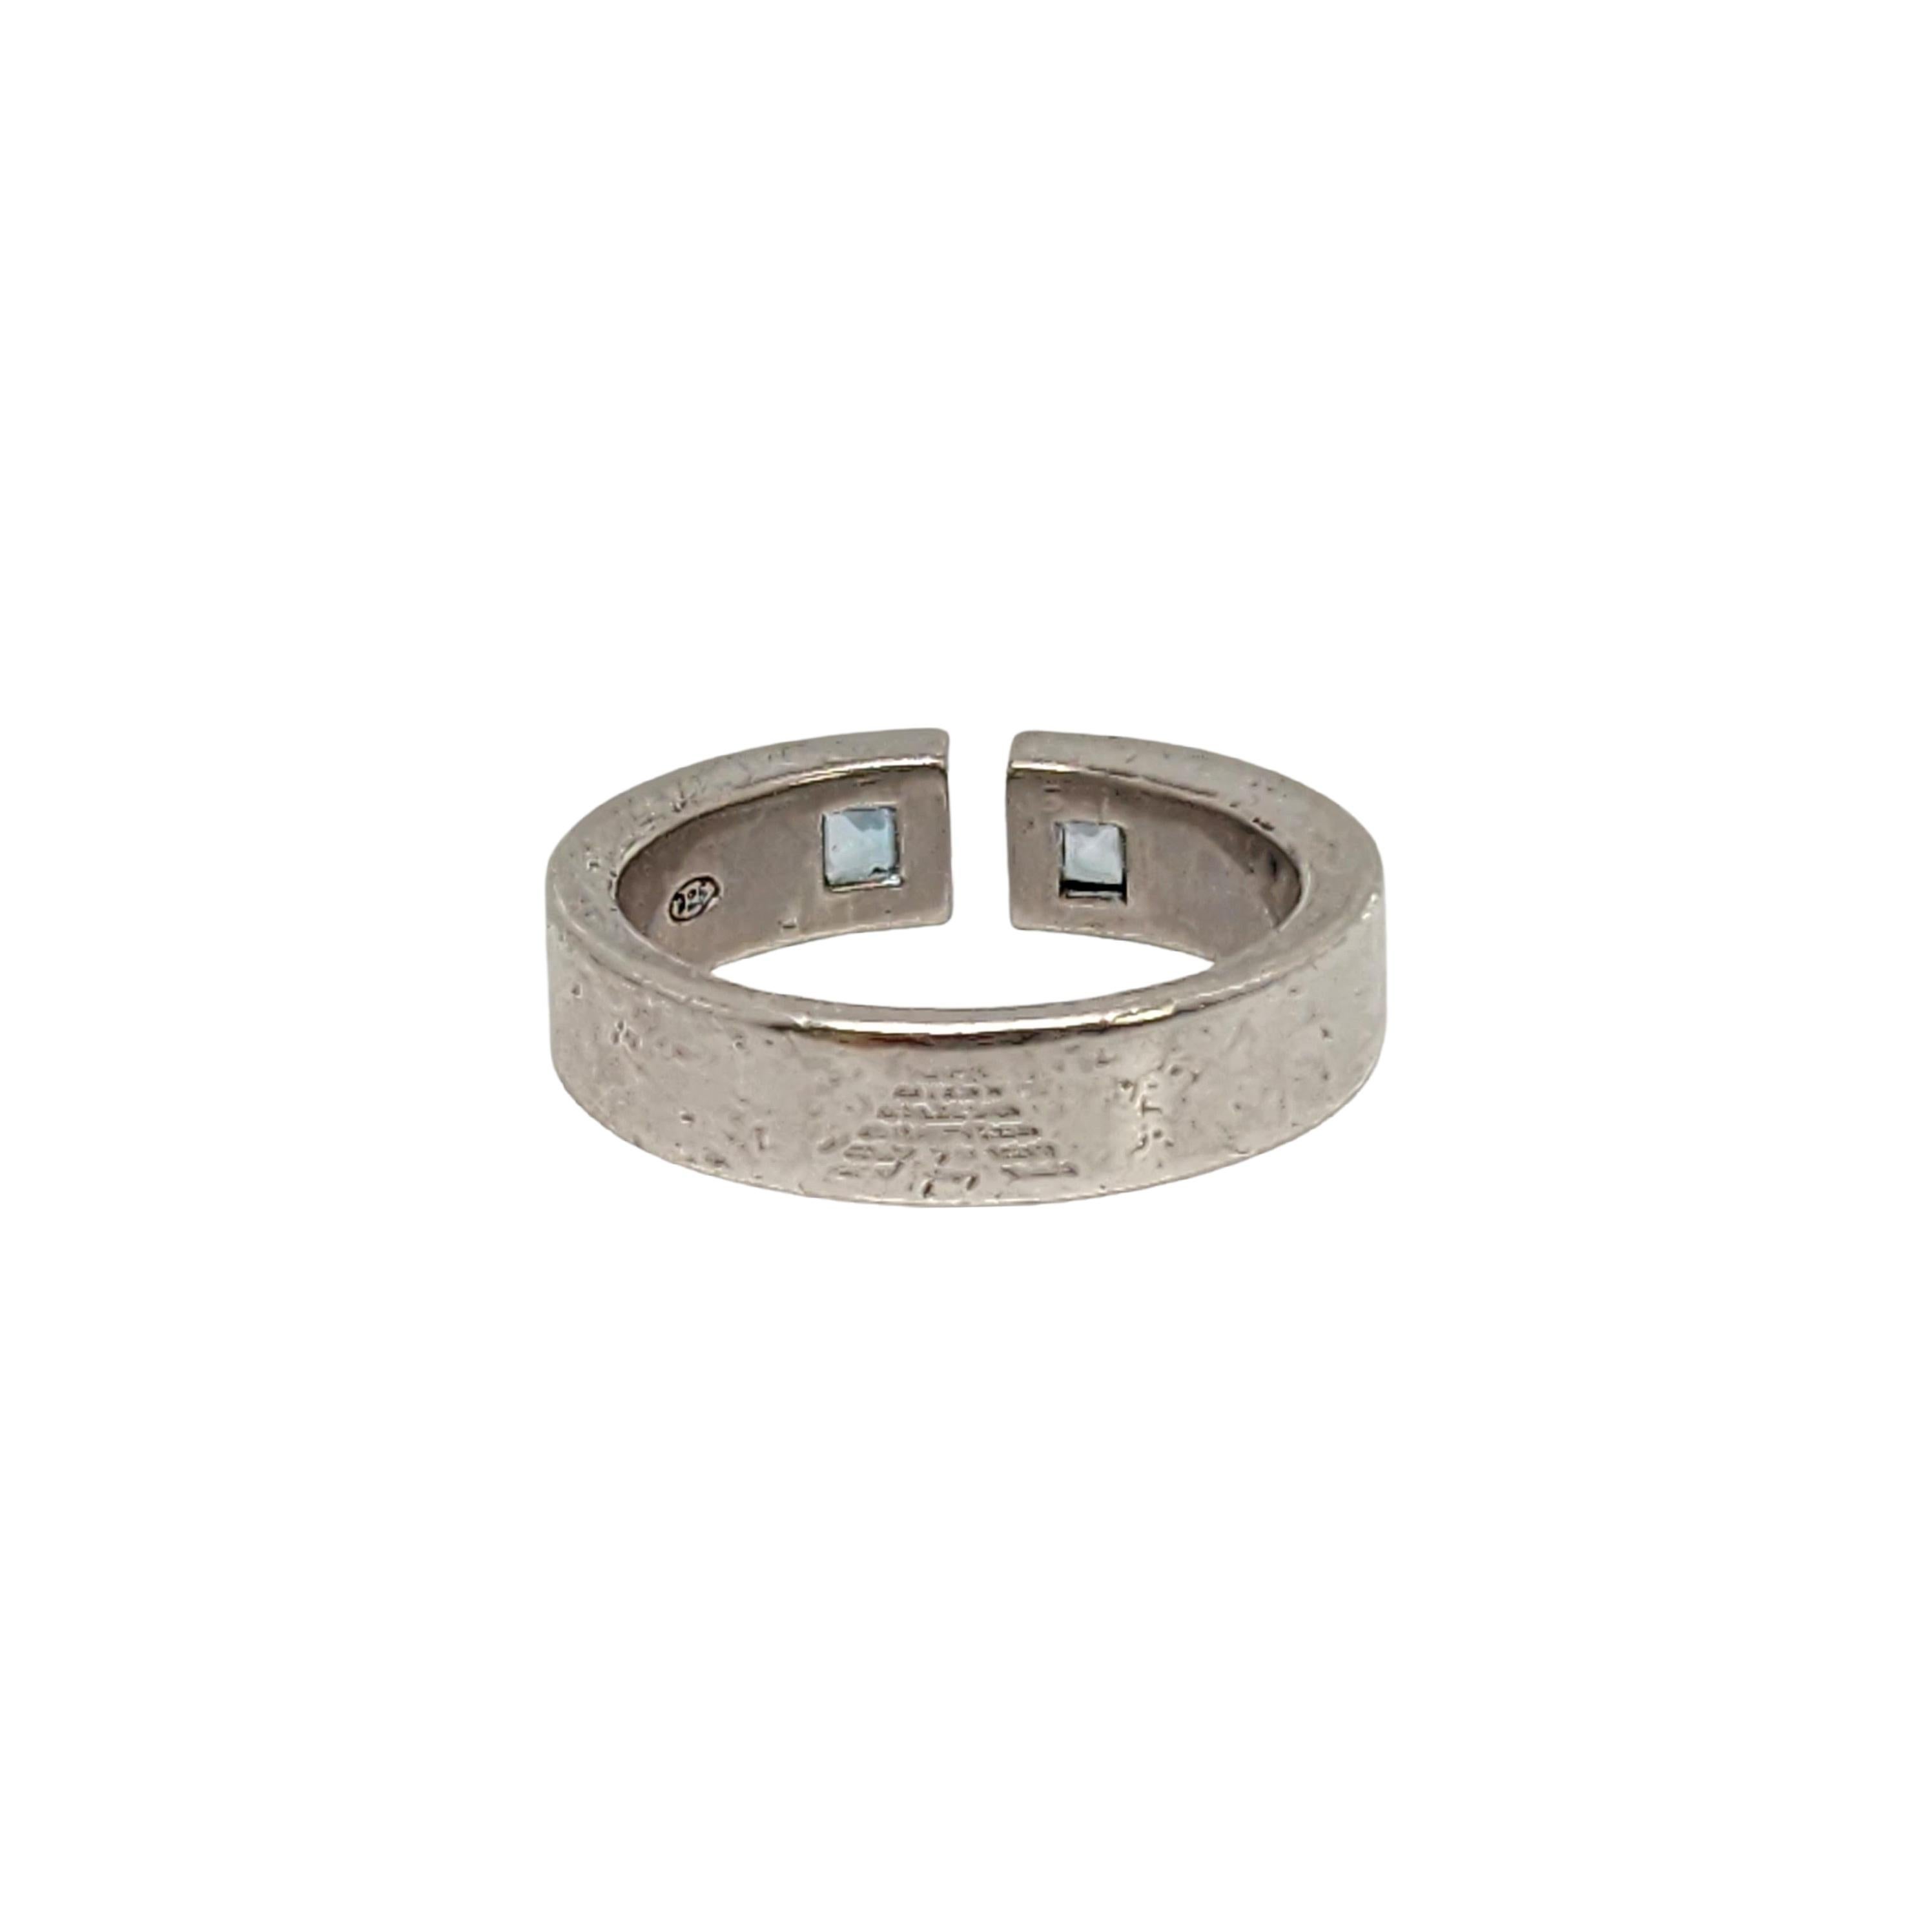 Square Cut Emporio Armani Sterling Silver Blue Stone Band Ring Size 6.75 #14782 For Sale